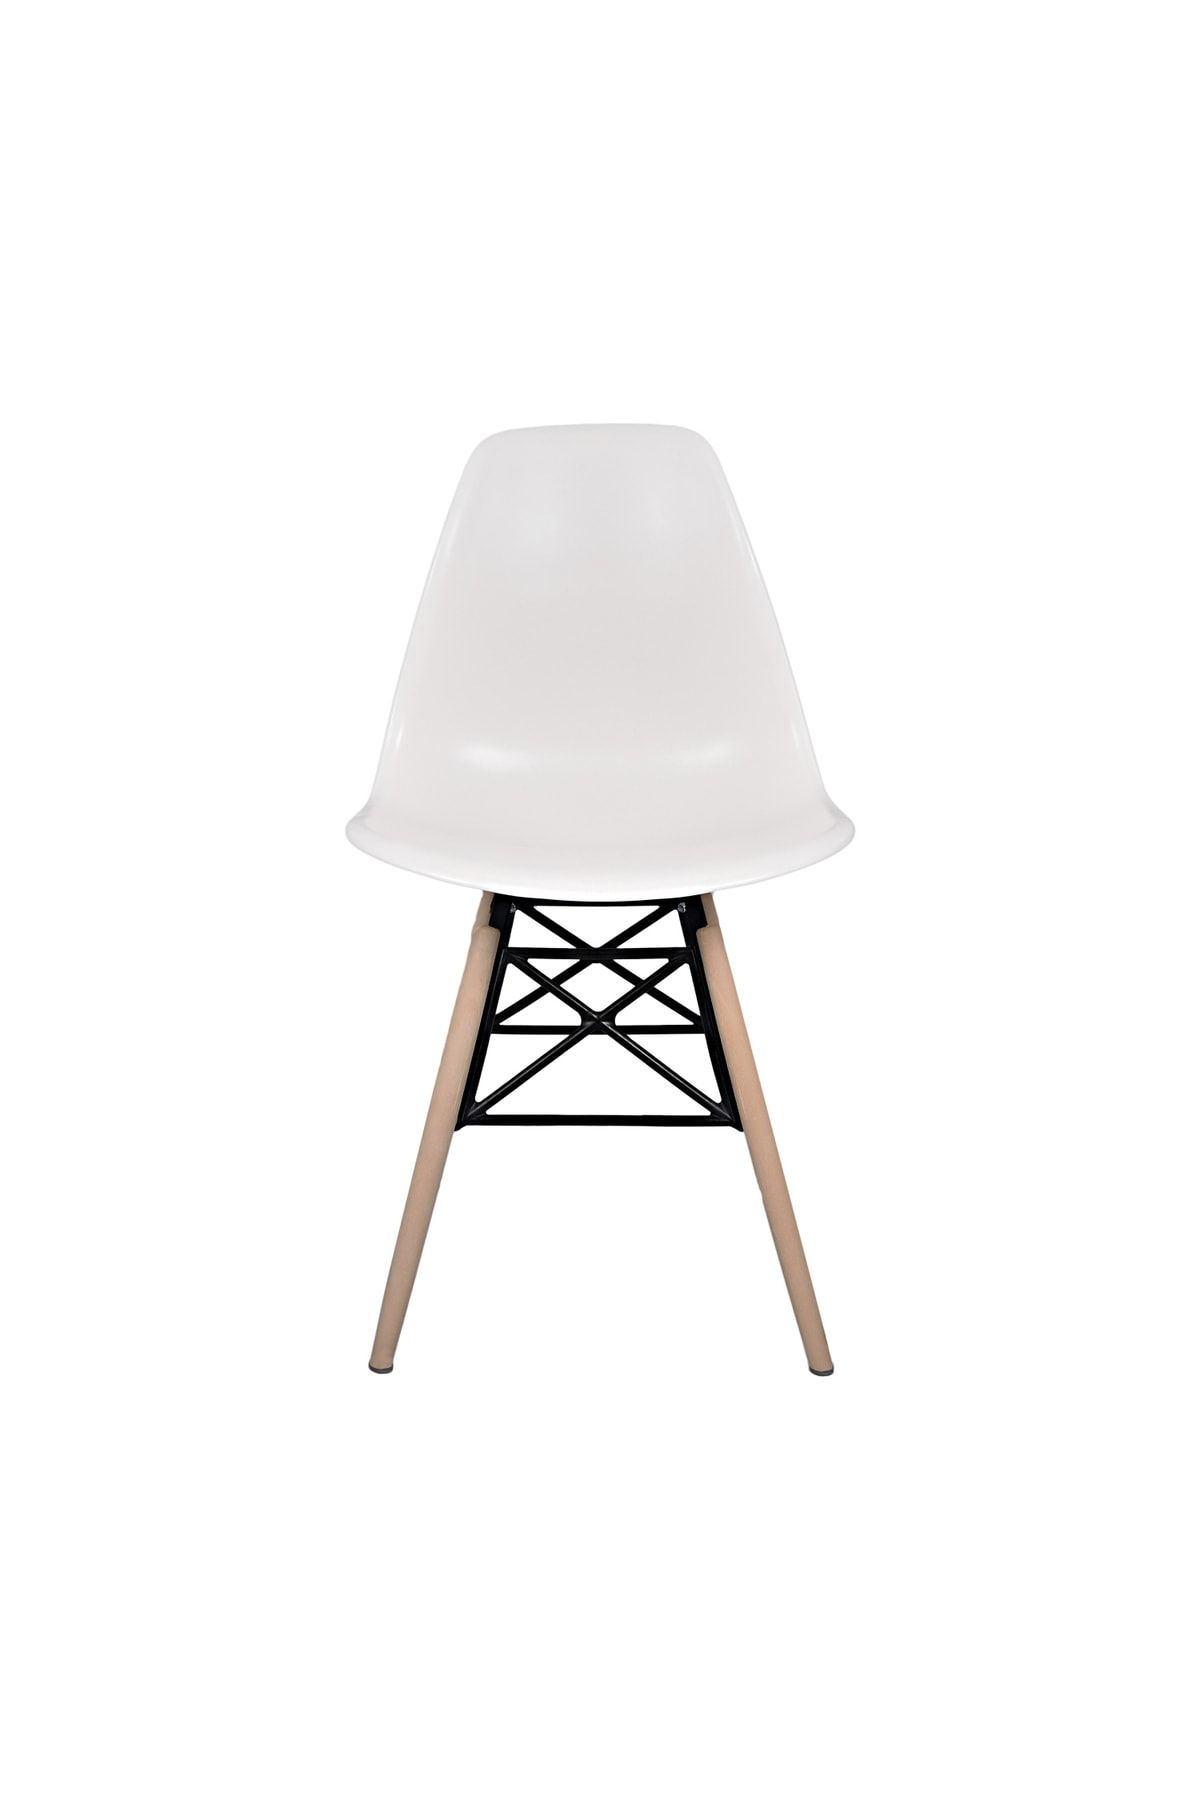 Dorcia Home Beyaz Eames Plastik Kafesli Sandalye - Cafe Balkon Mutfak Sandalyesi